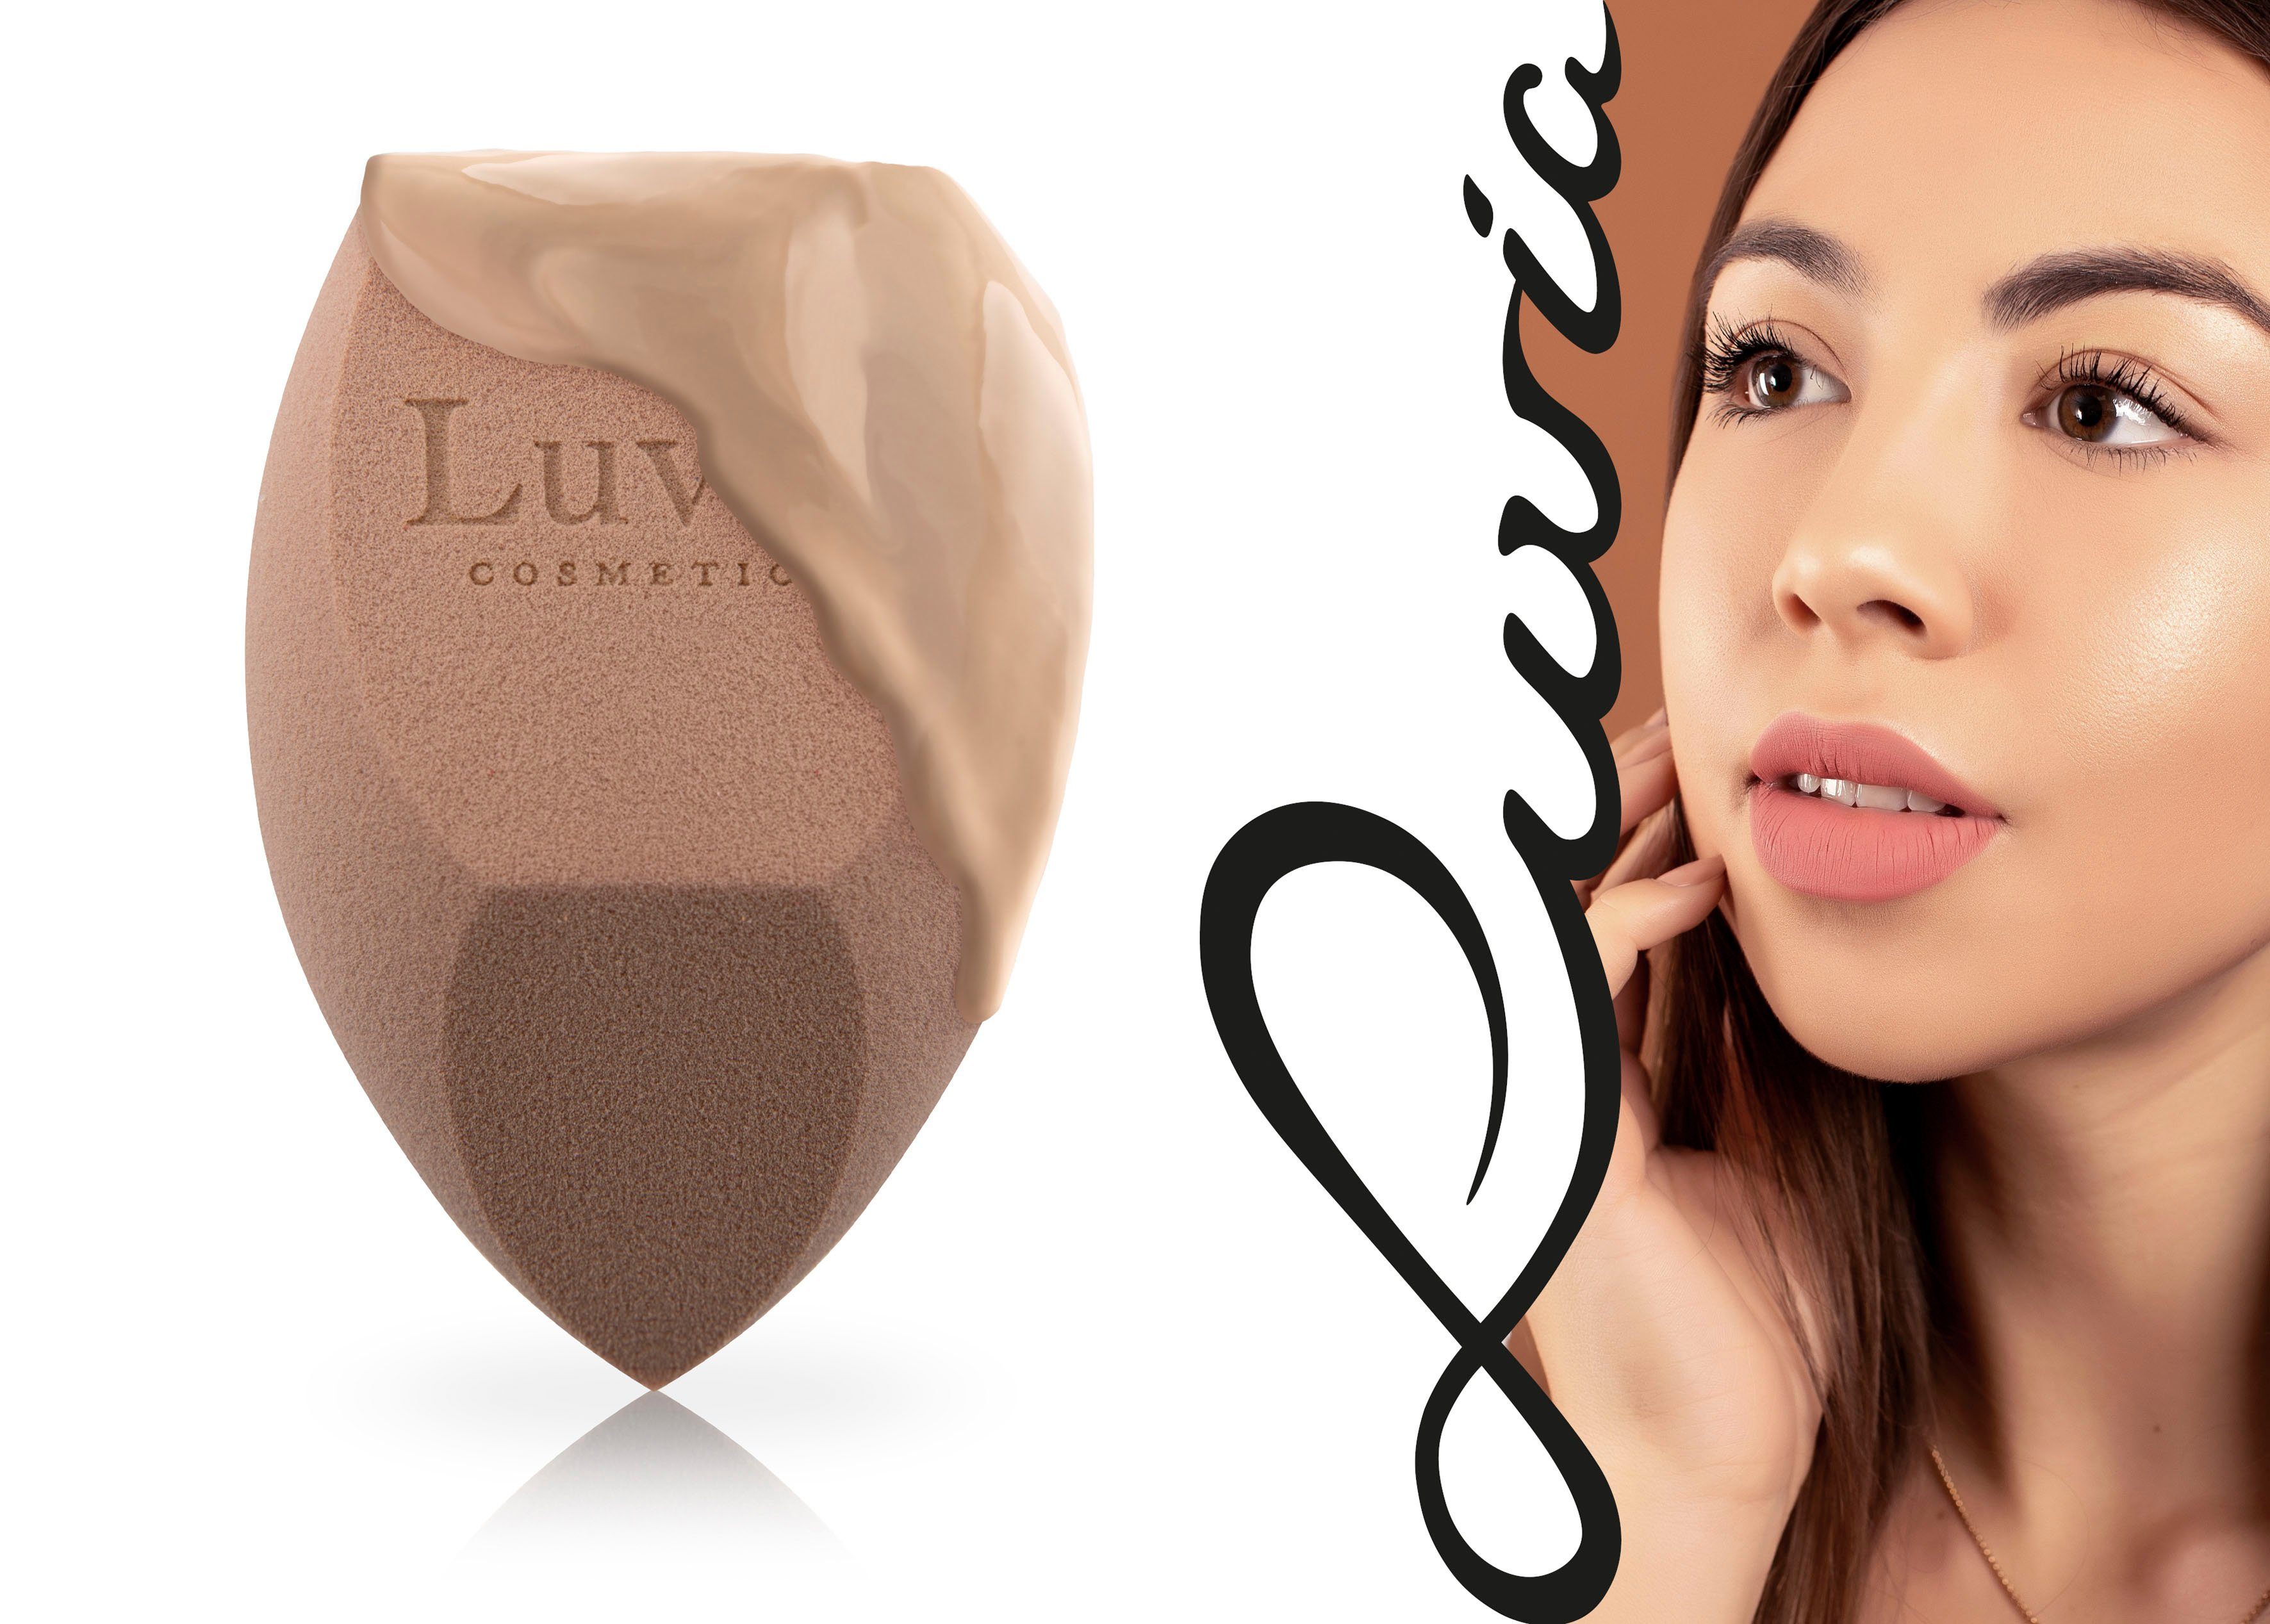 Luvia Cosmetics Make-up Vegan Body Sponge, Schwamm Prime XXL Make-up Schwamm